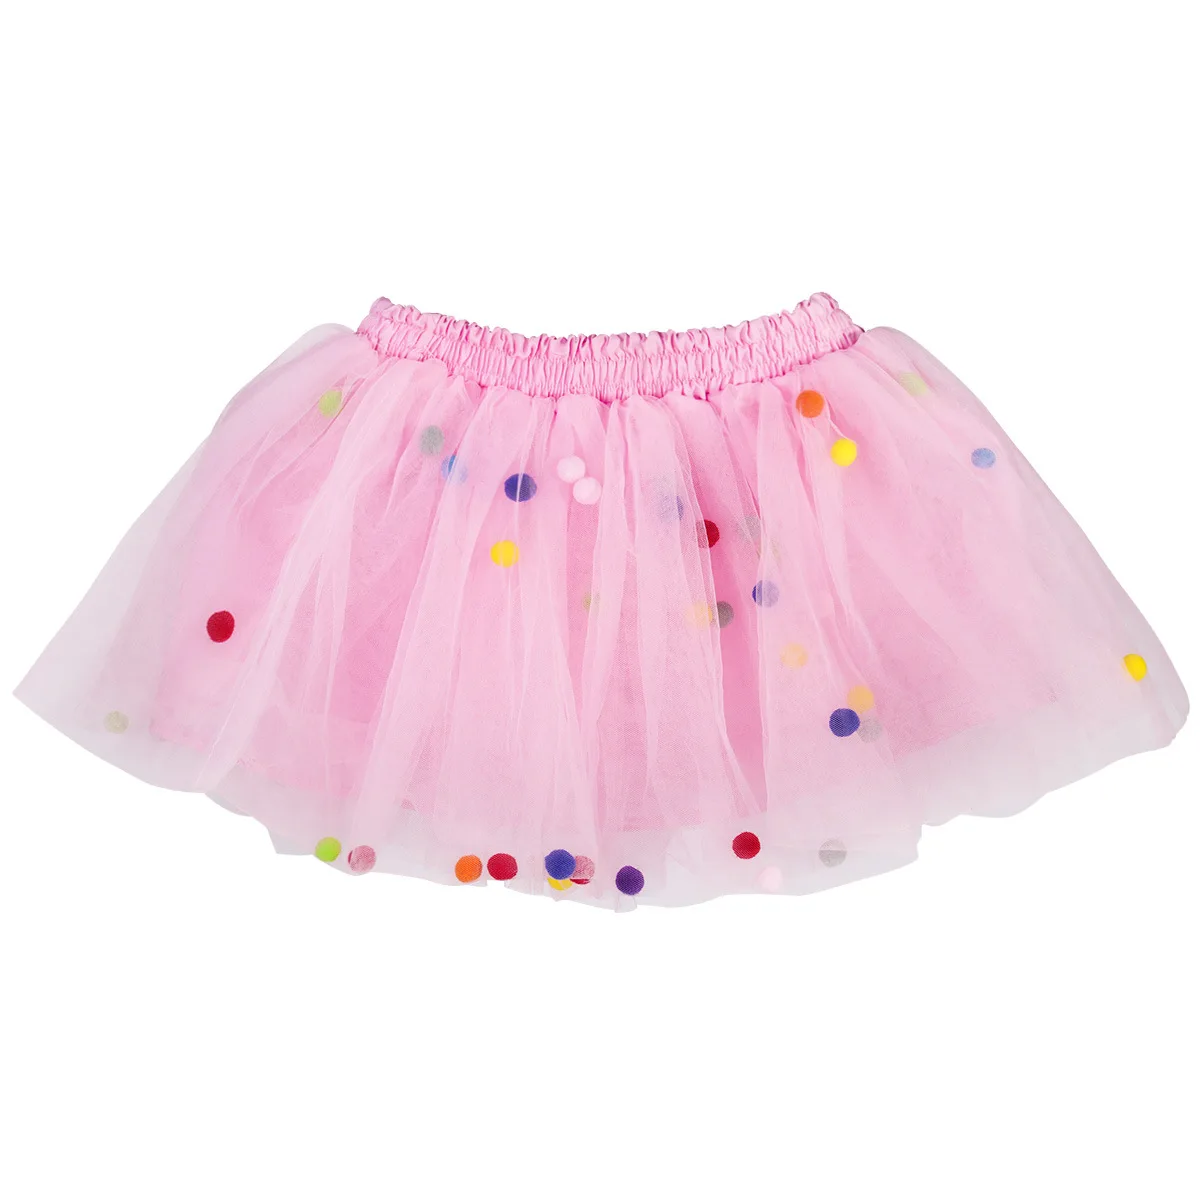 Colorful Pom Poms Skirt Tutu Dress For Baby,Layered Ballet Tulle ...